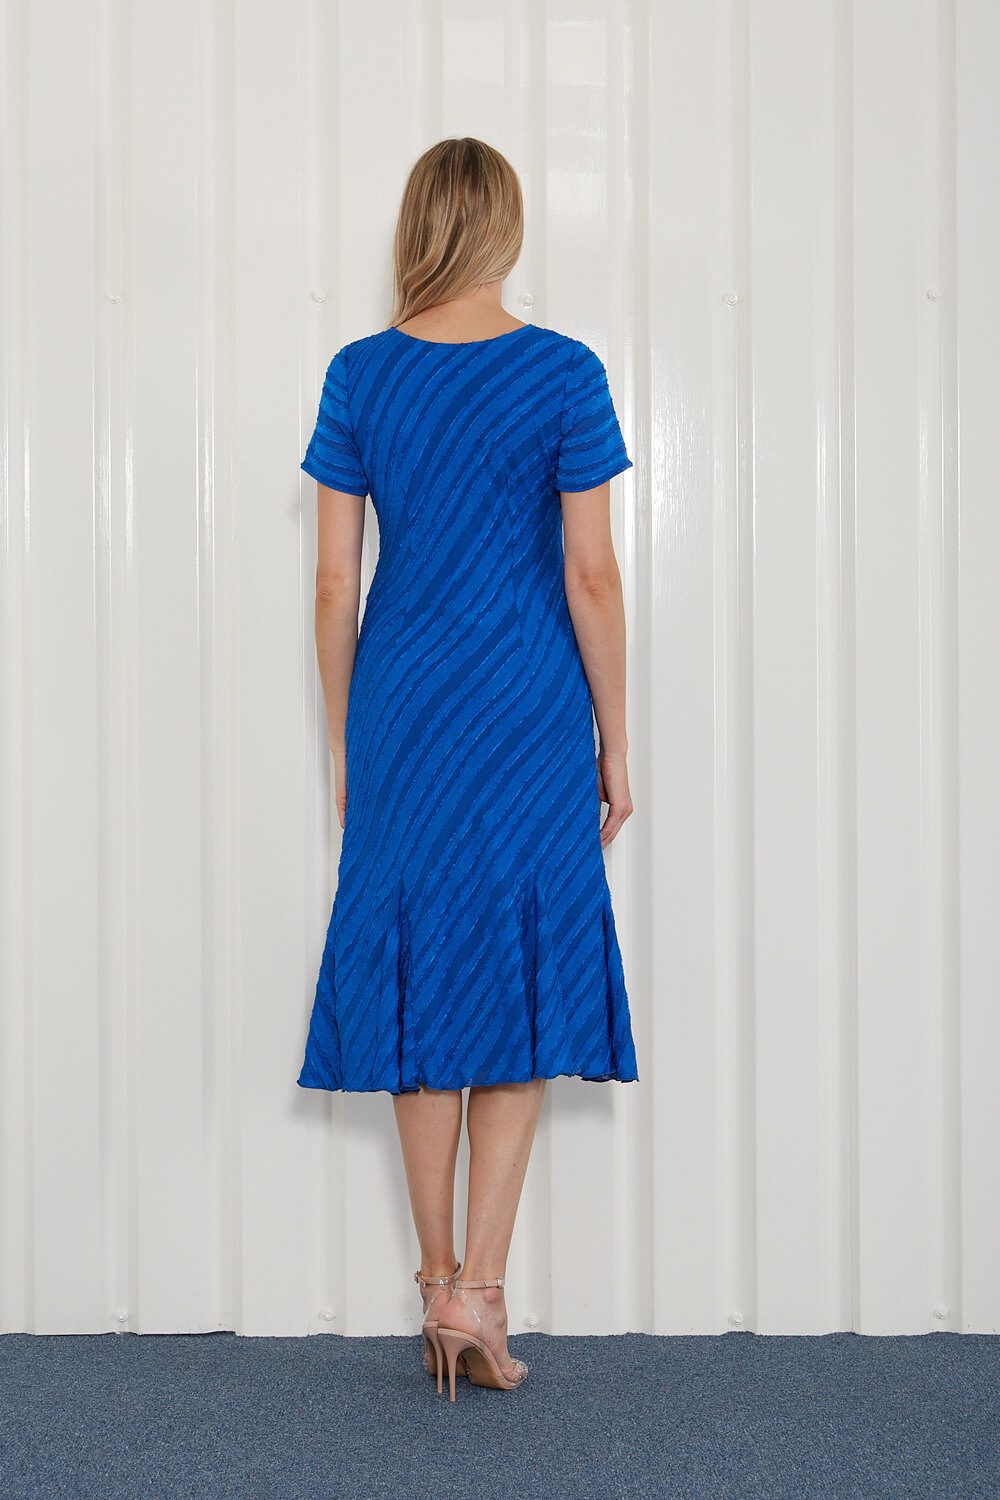 Royal Blue Julianna Burnout Stripe Print Dress, Image 2 of 4